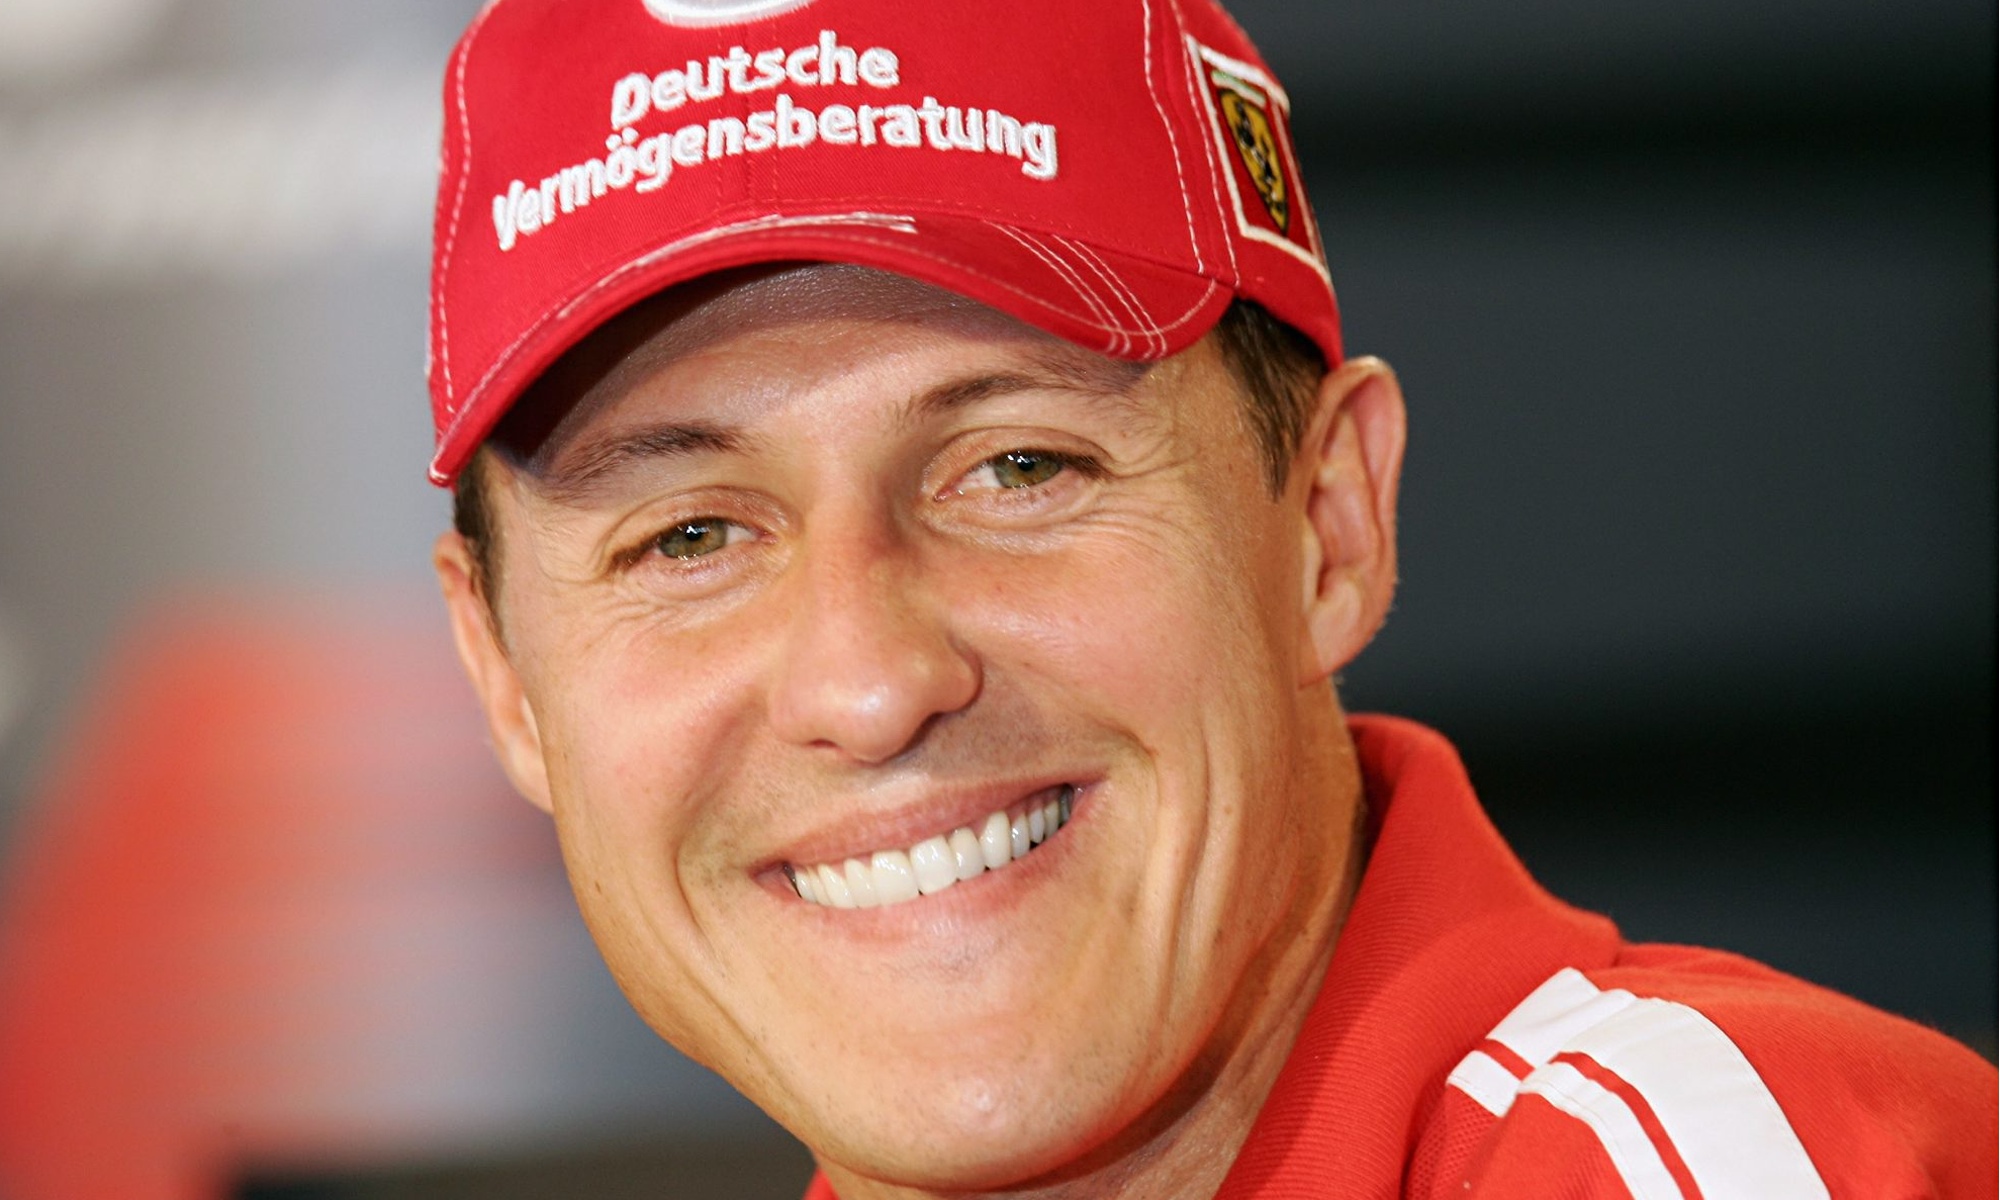 Biographie de Michael Schumacher